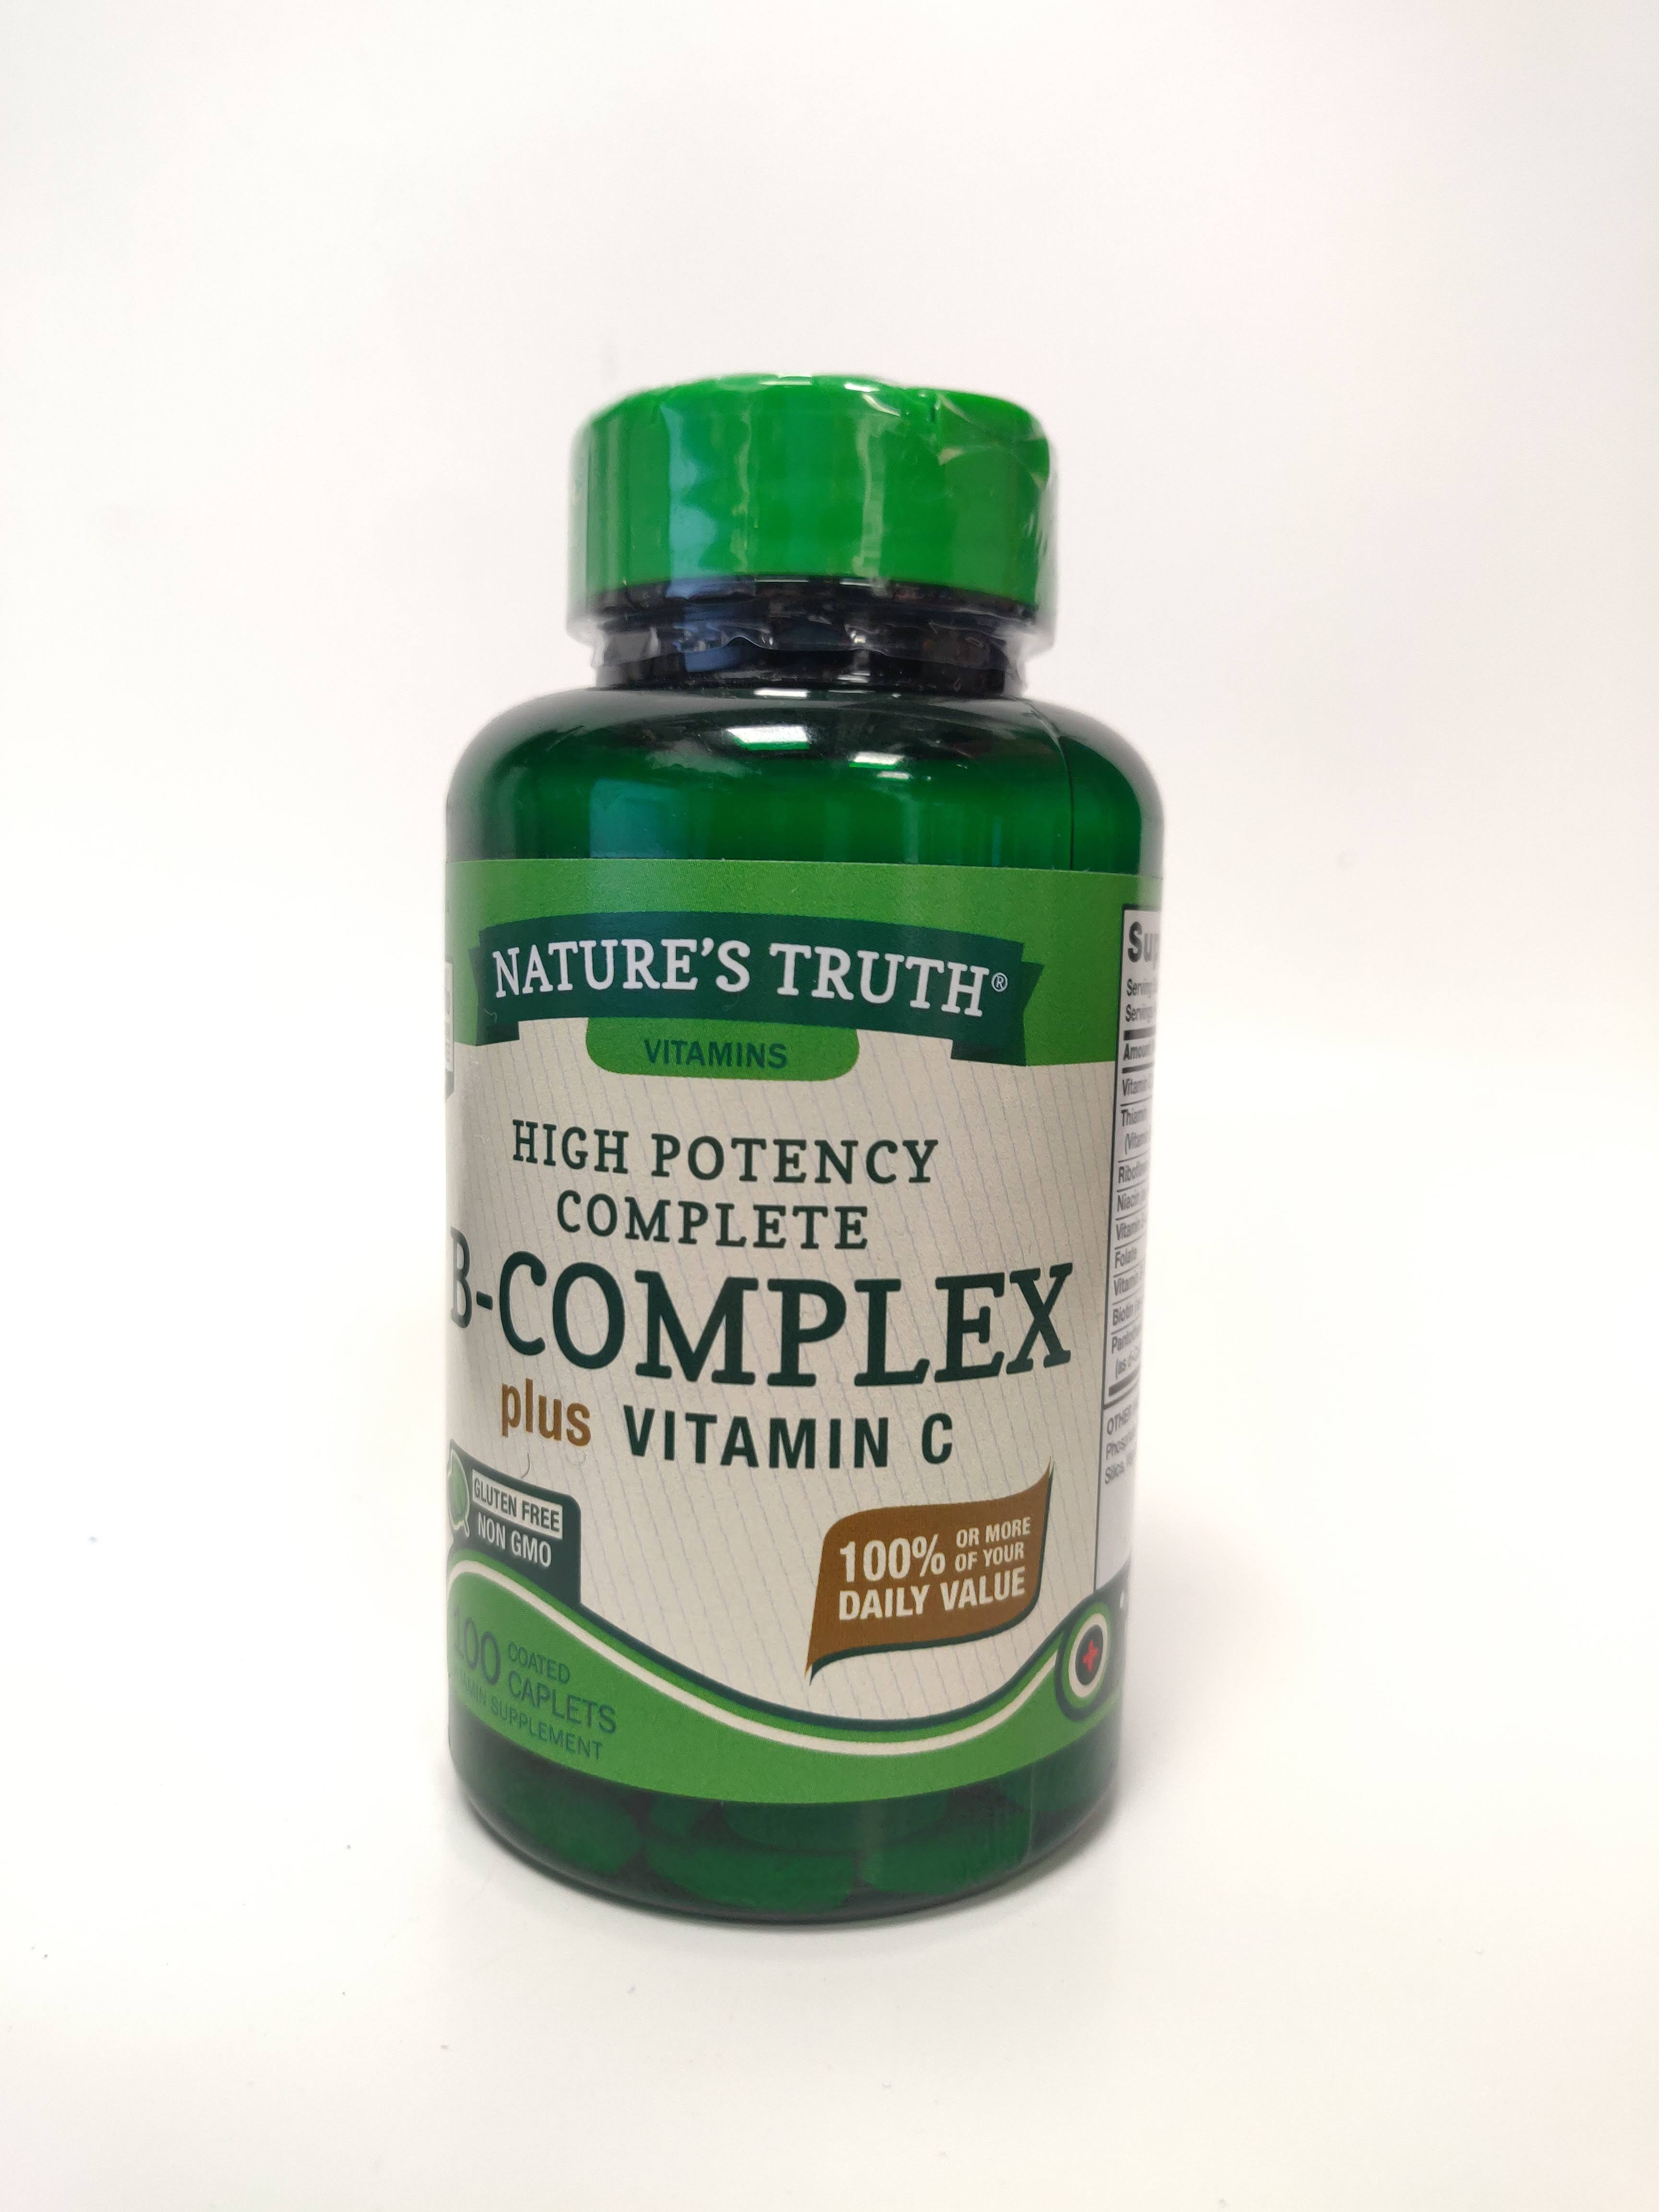 Nature's Truth High Potency Complete B-Complex Plus Vitamin C - 100 Caplets